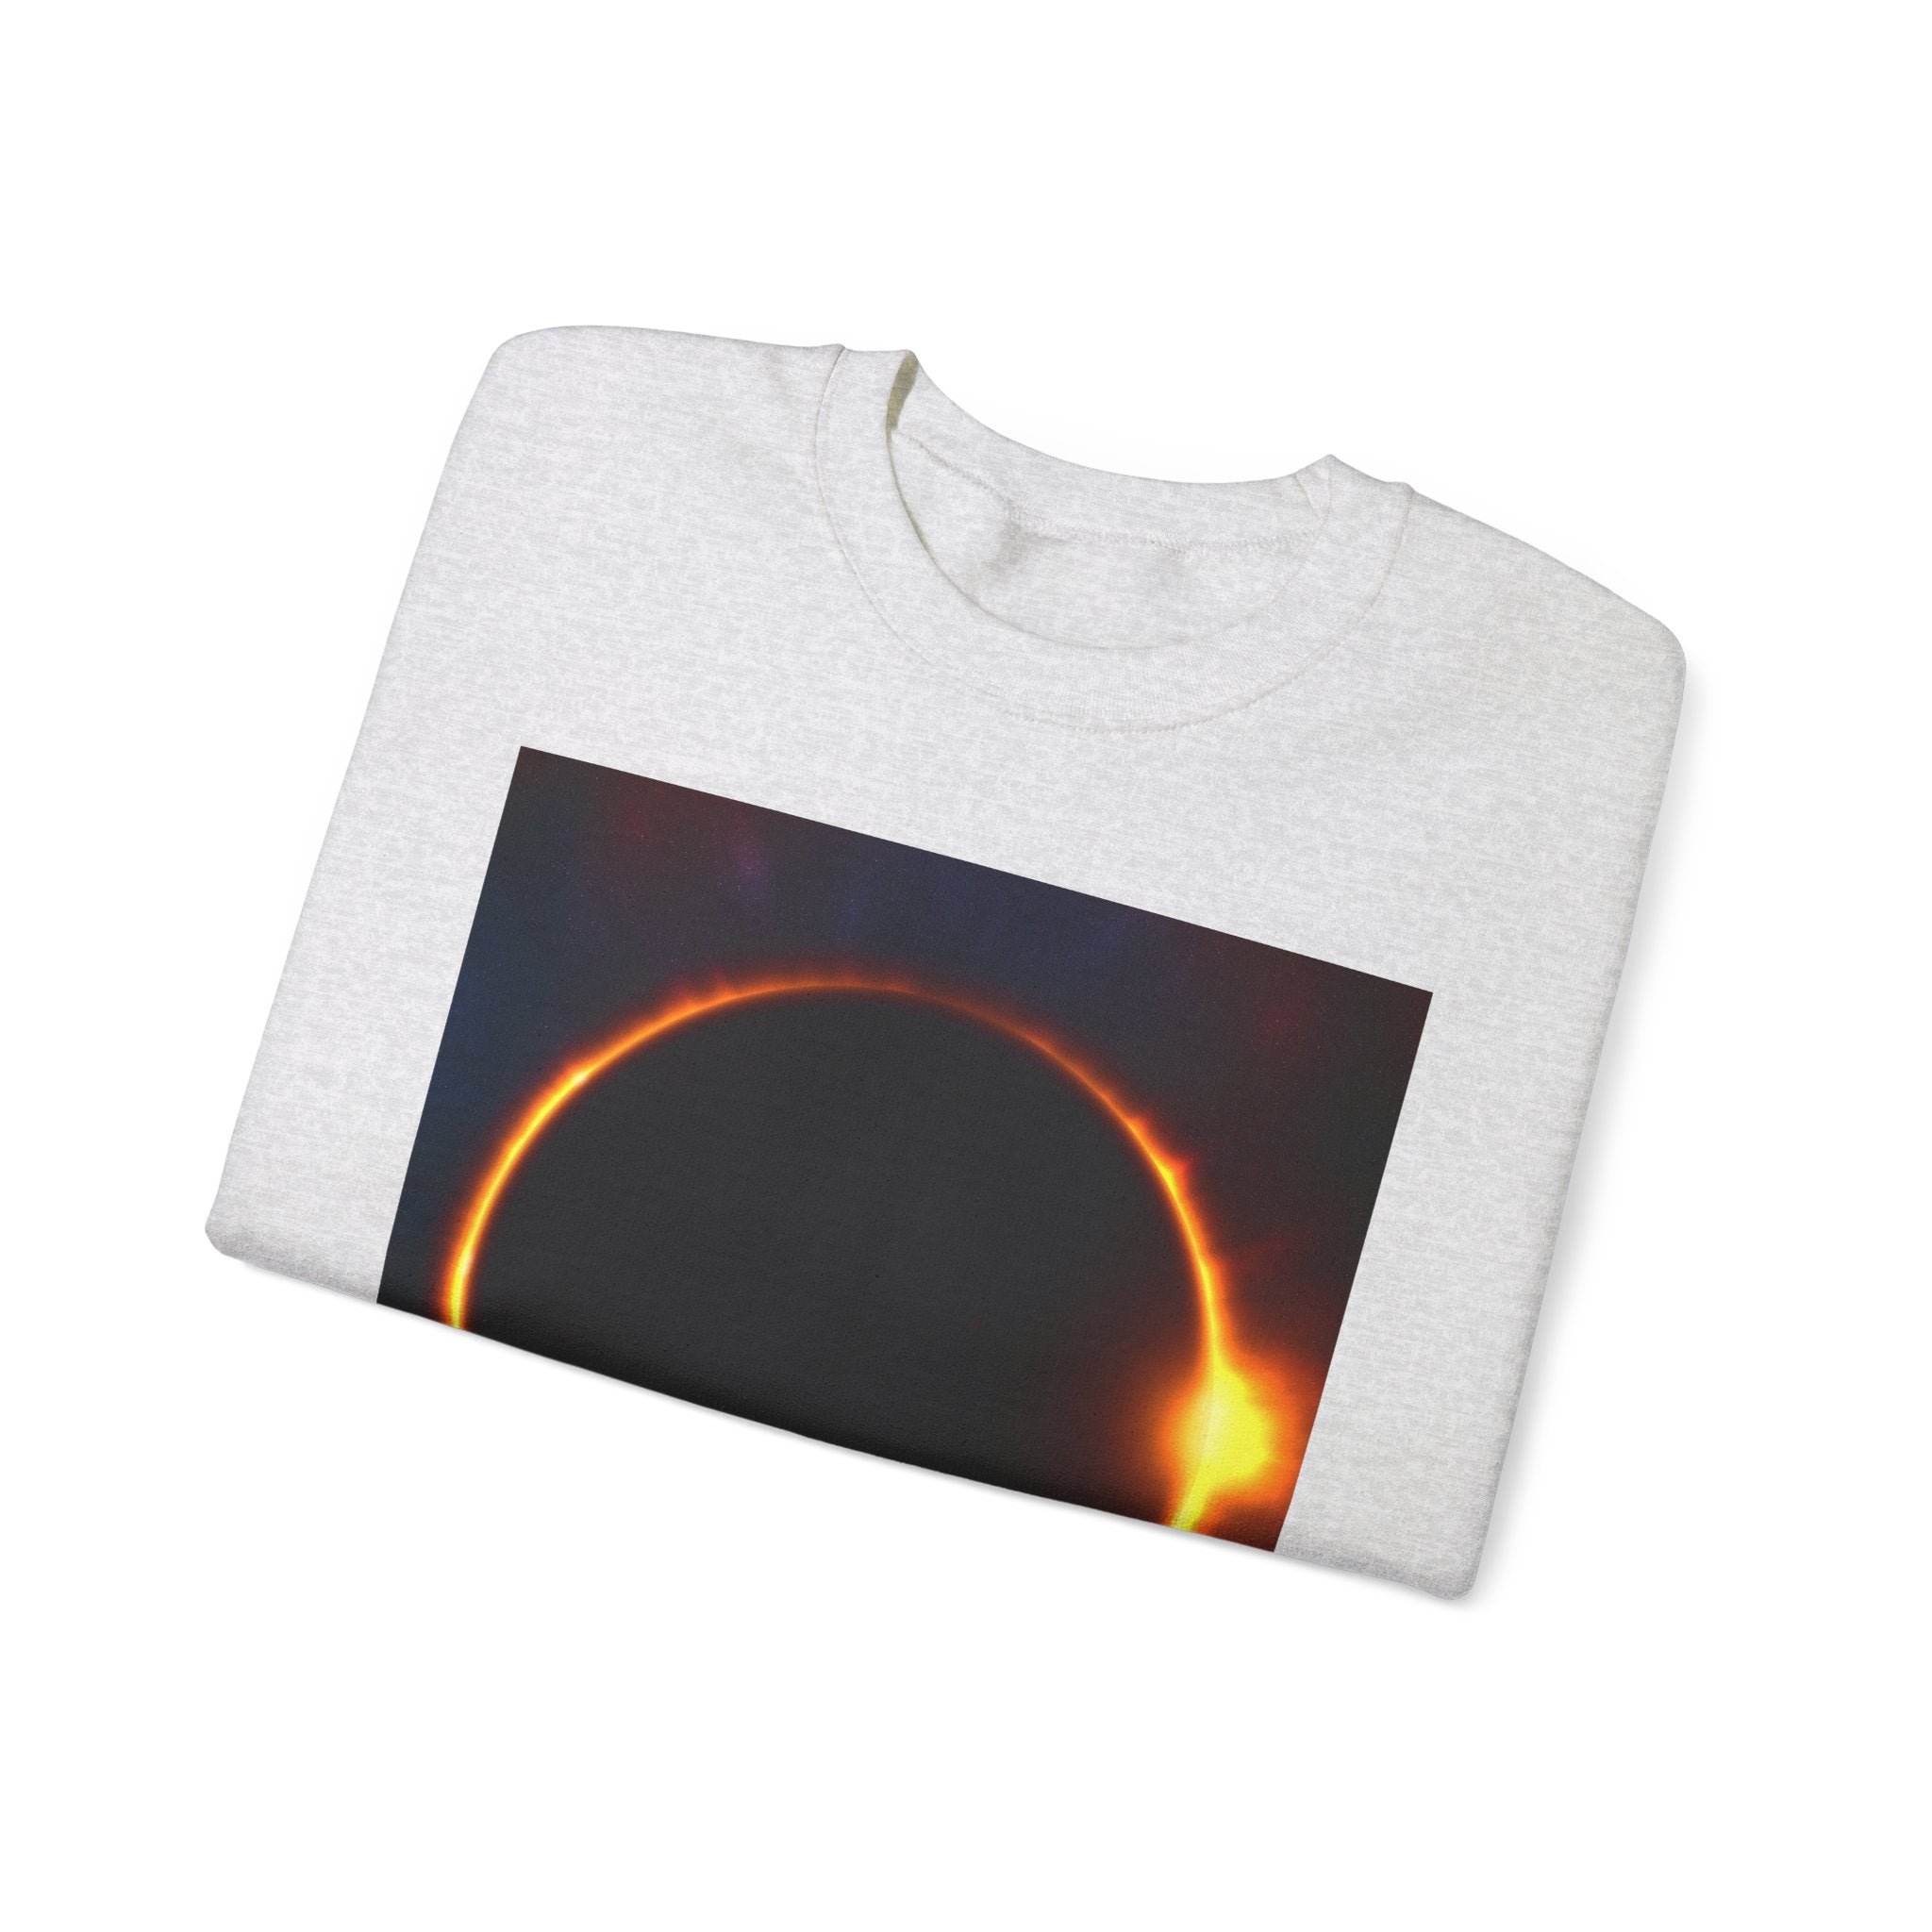 Eclipse of my Heart Crewneck Sweatshirt